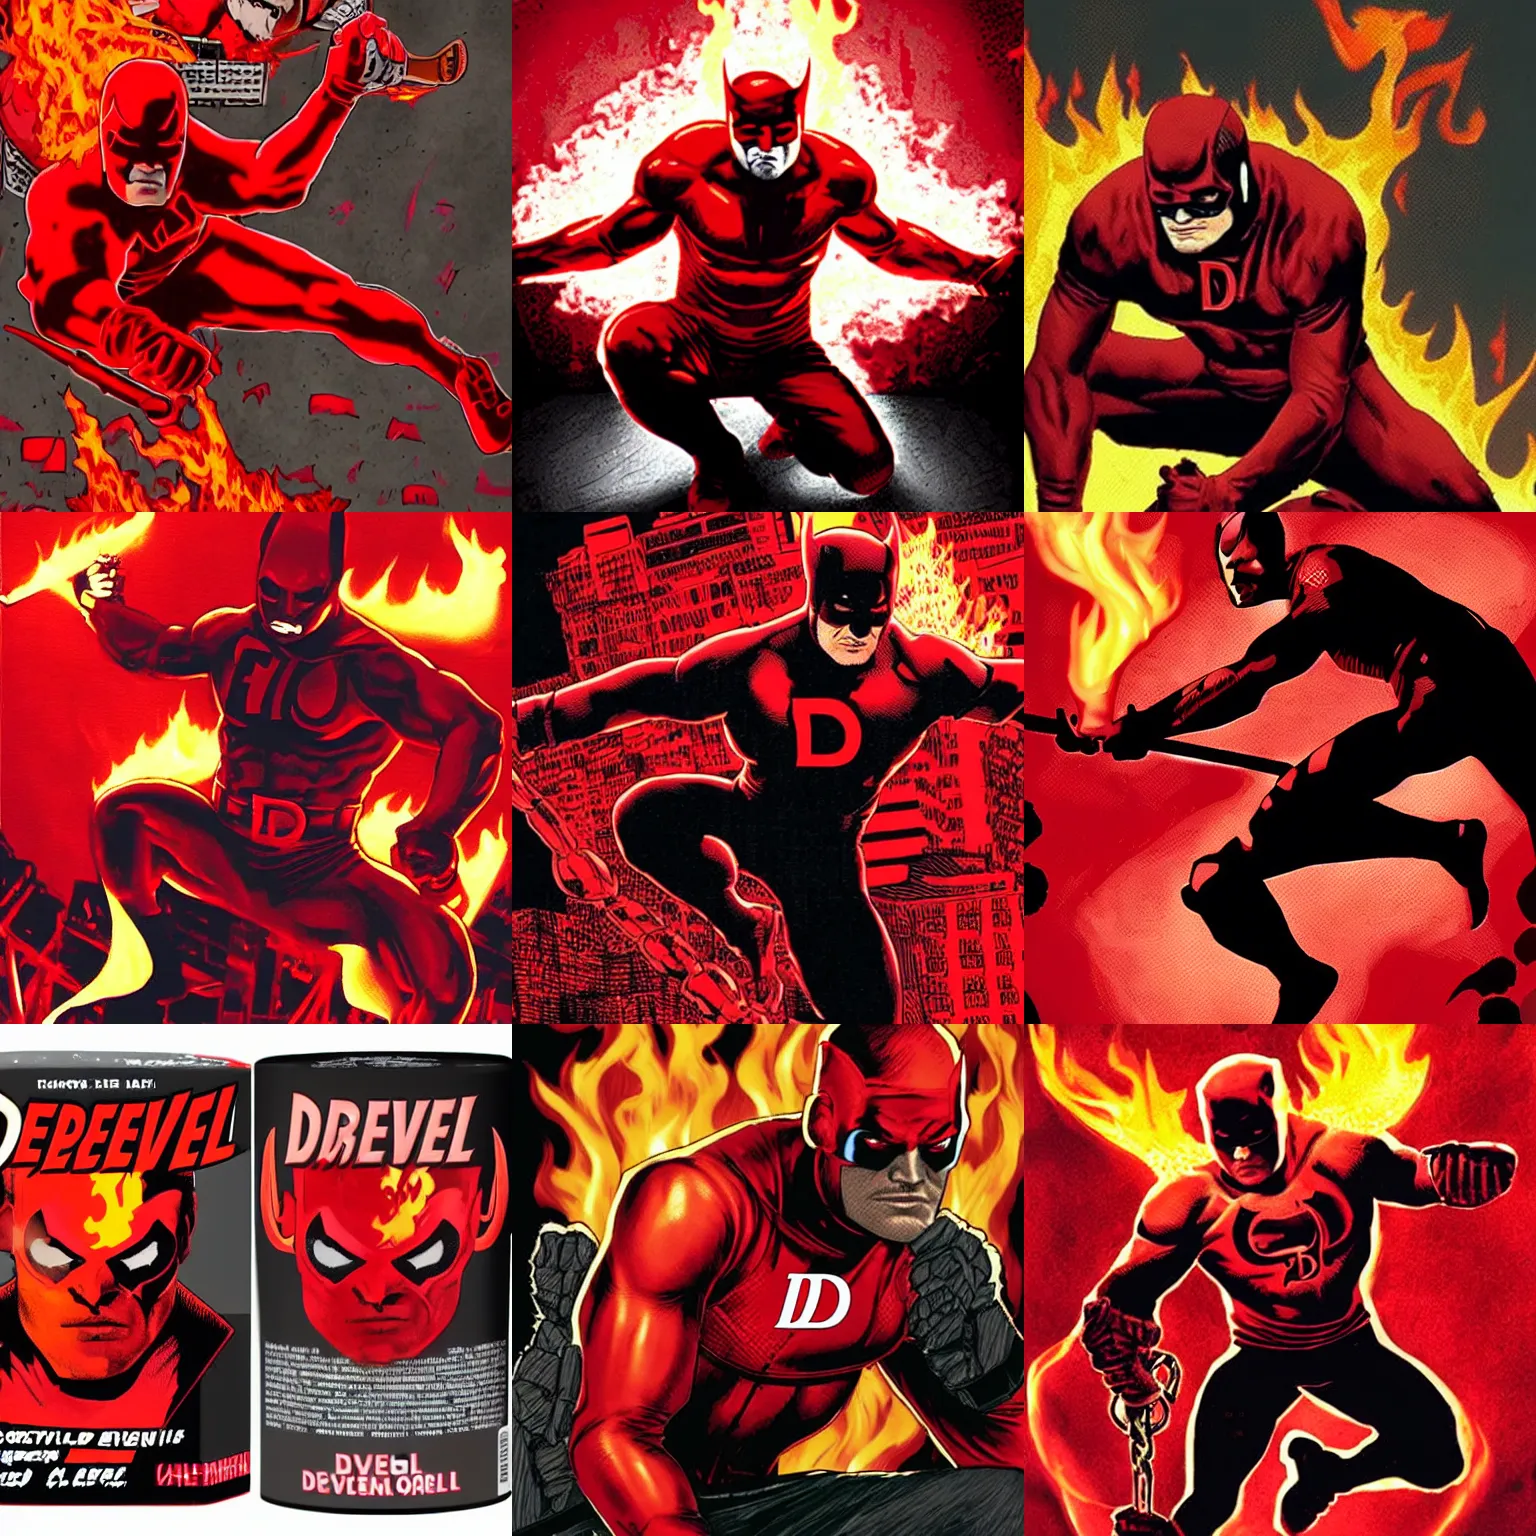 Prompt: daredevil devil red on fire